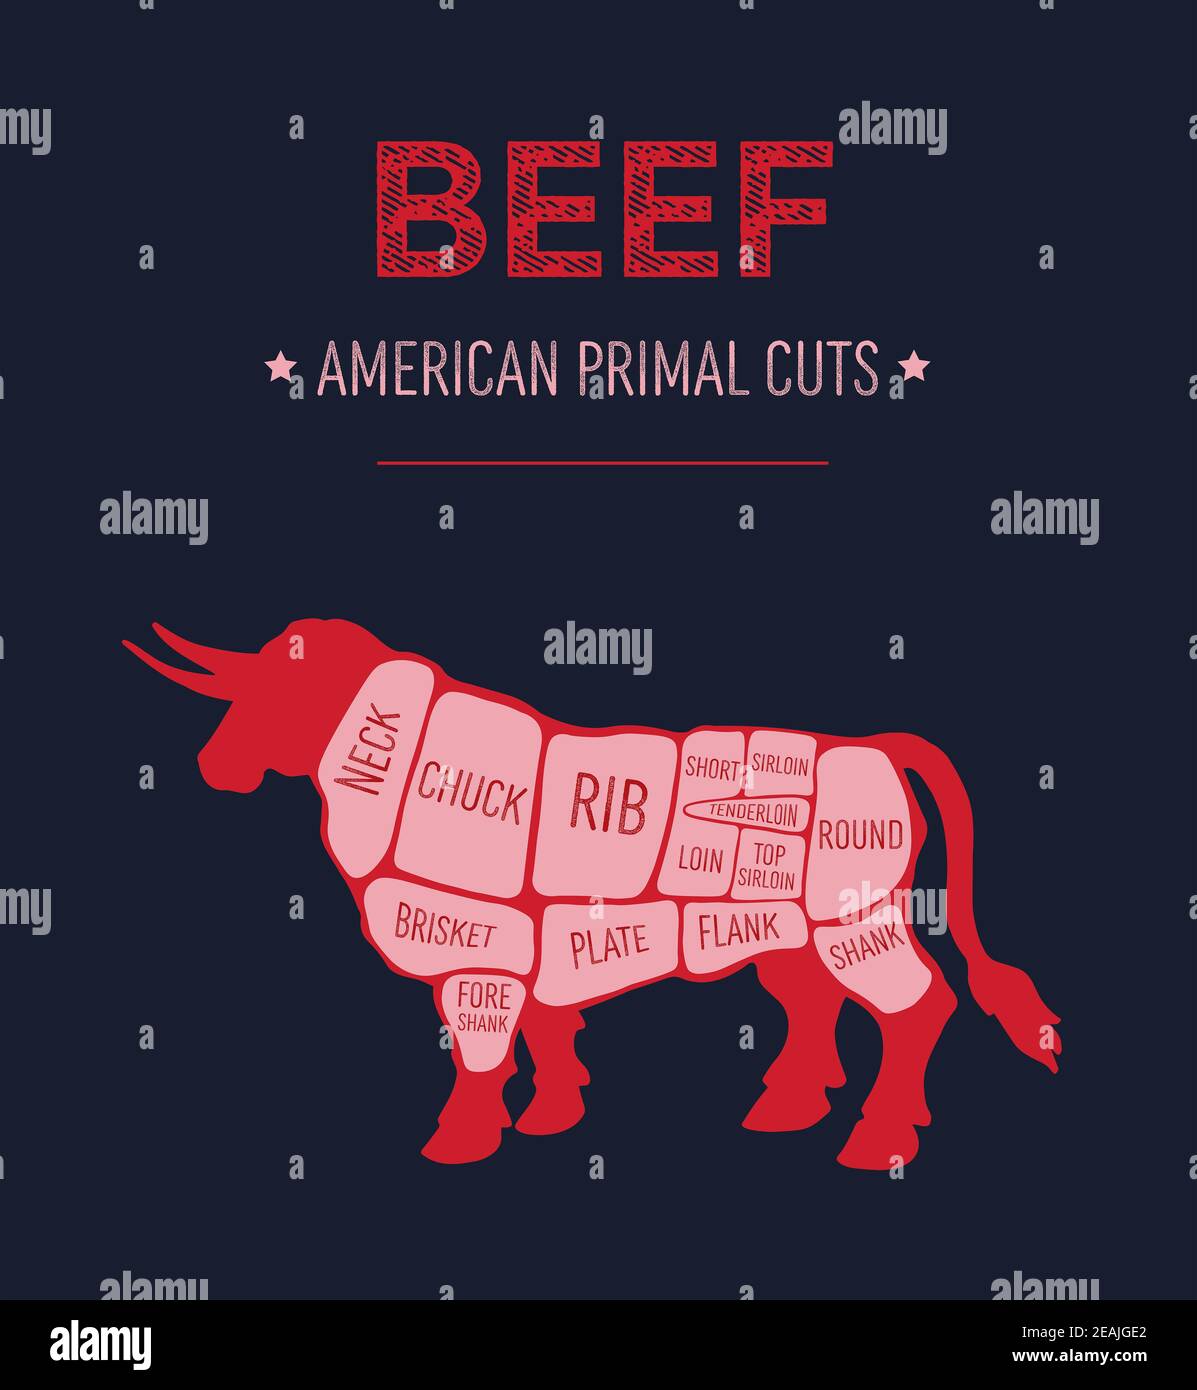 American primal beef meat cuts diagram Stock Photo